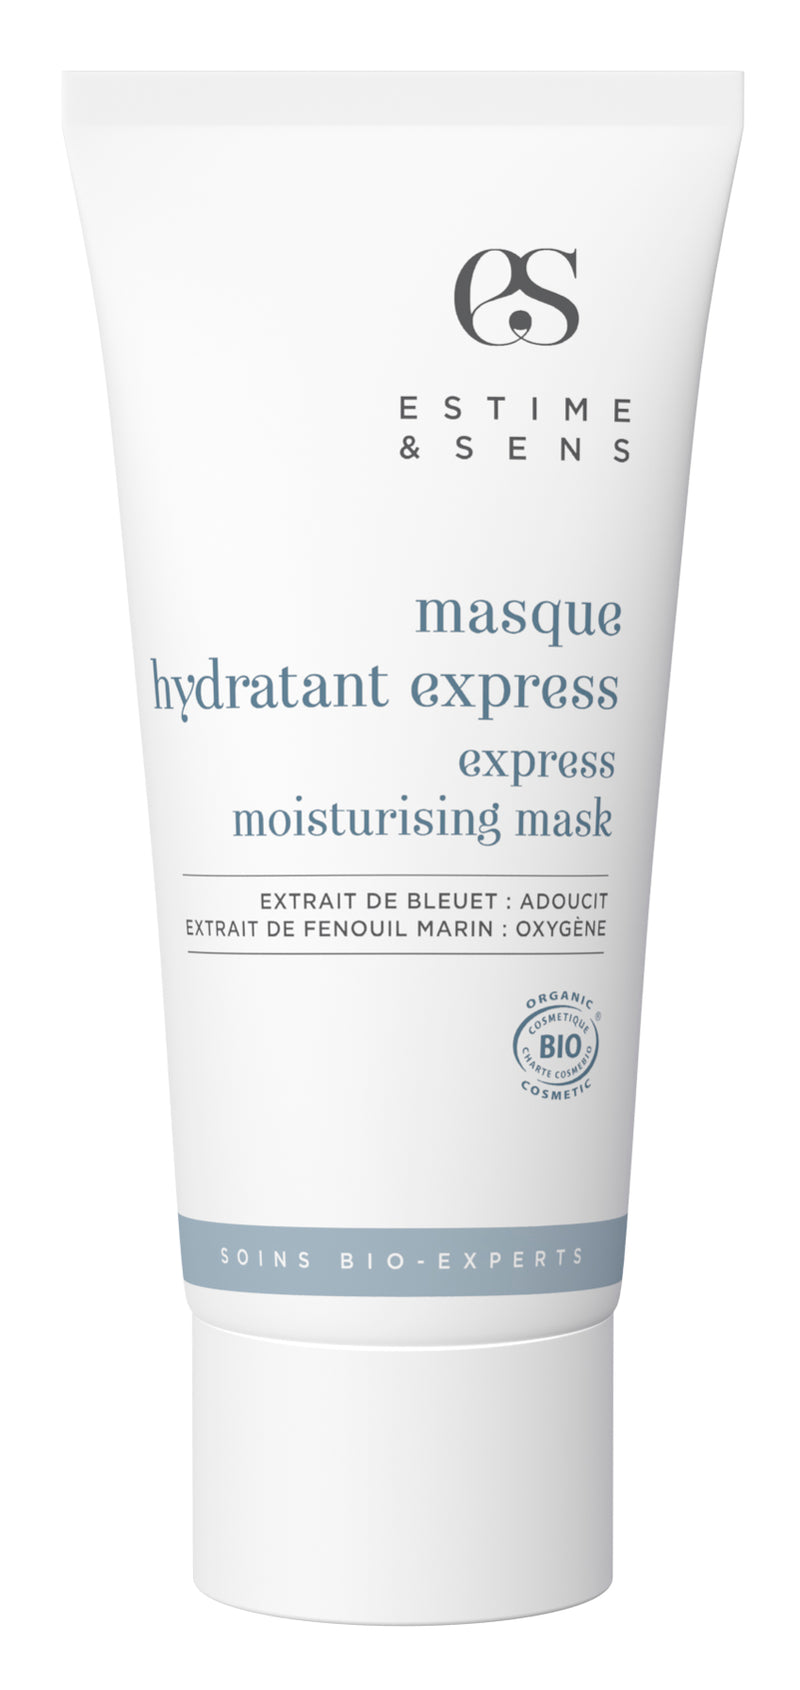 Express moisturizing mask